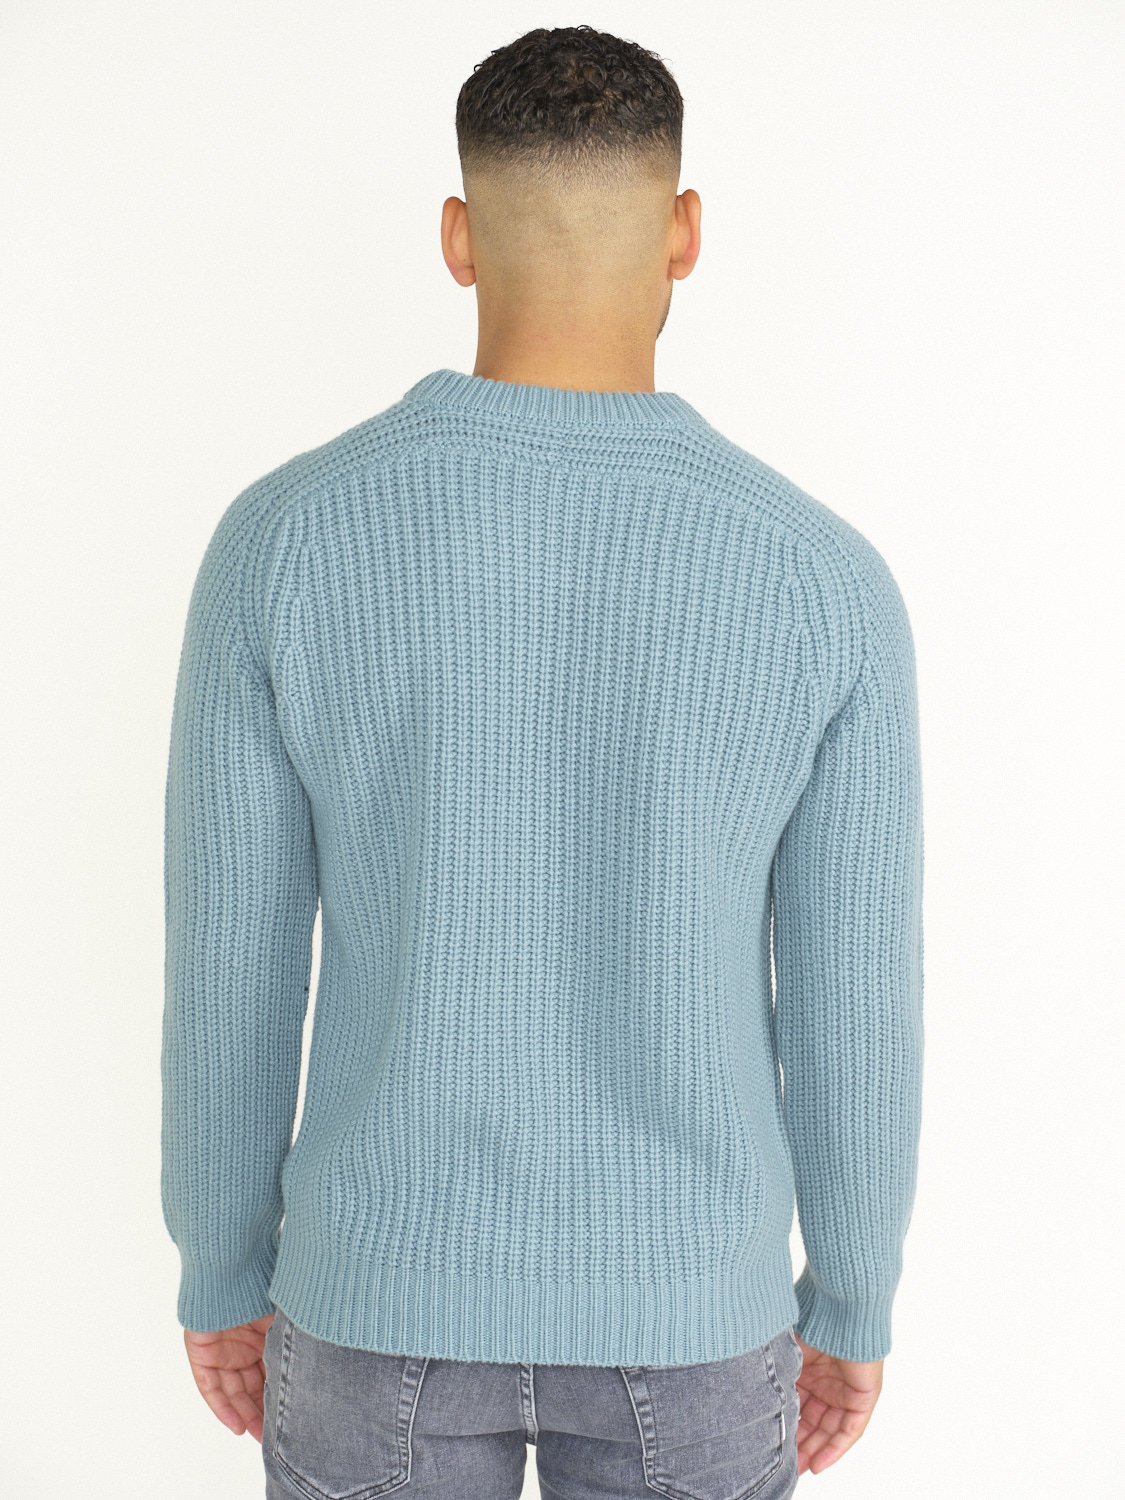 Stephan Boya Mood Rib Sweater - Rib knit sweater navy M